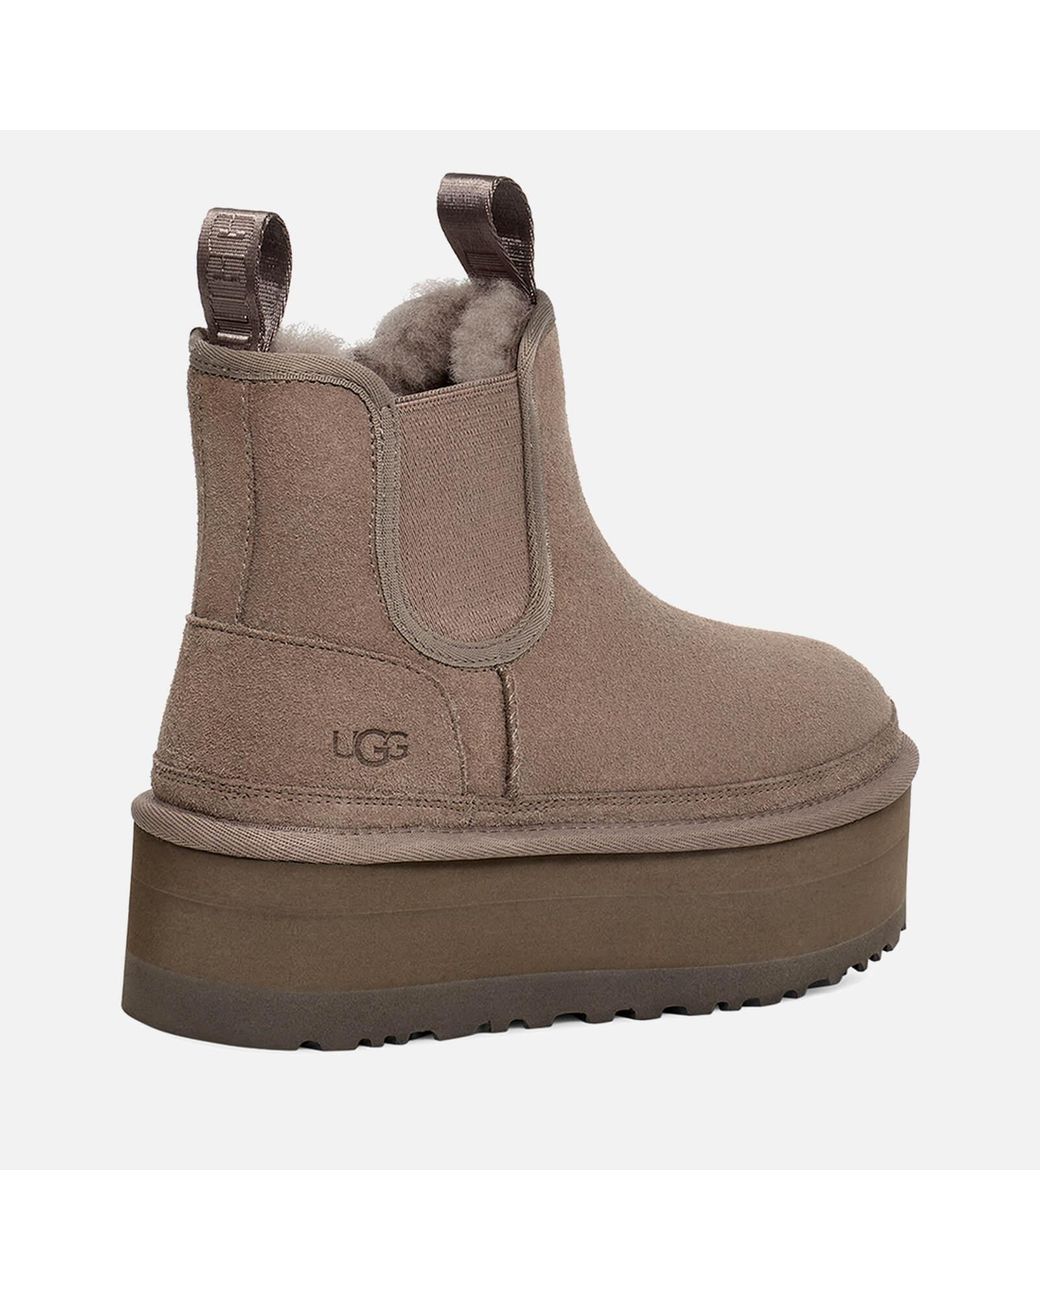 UGG Neumel Platform Sheepskin And Suede Chelsea Boots in Brown | Lyst